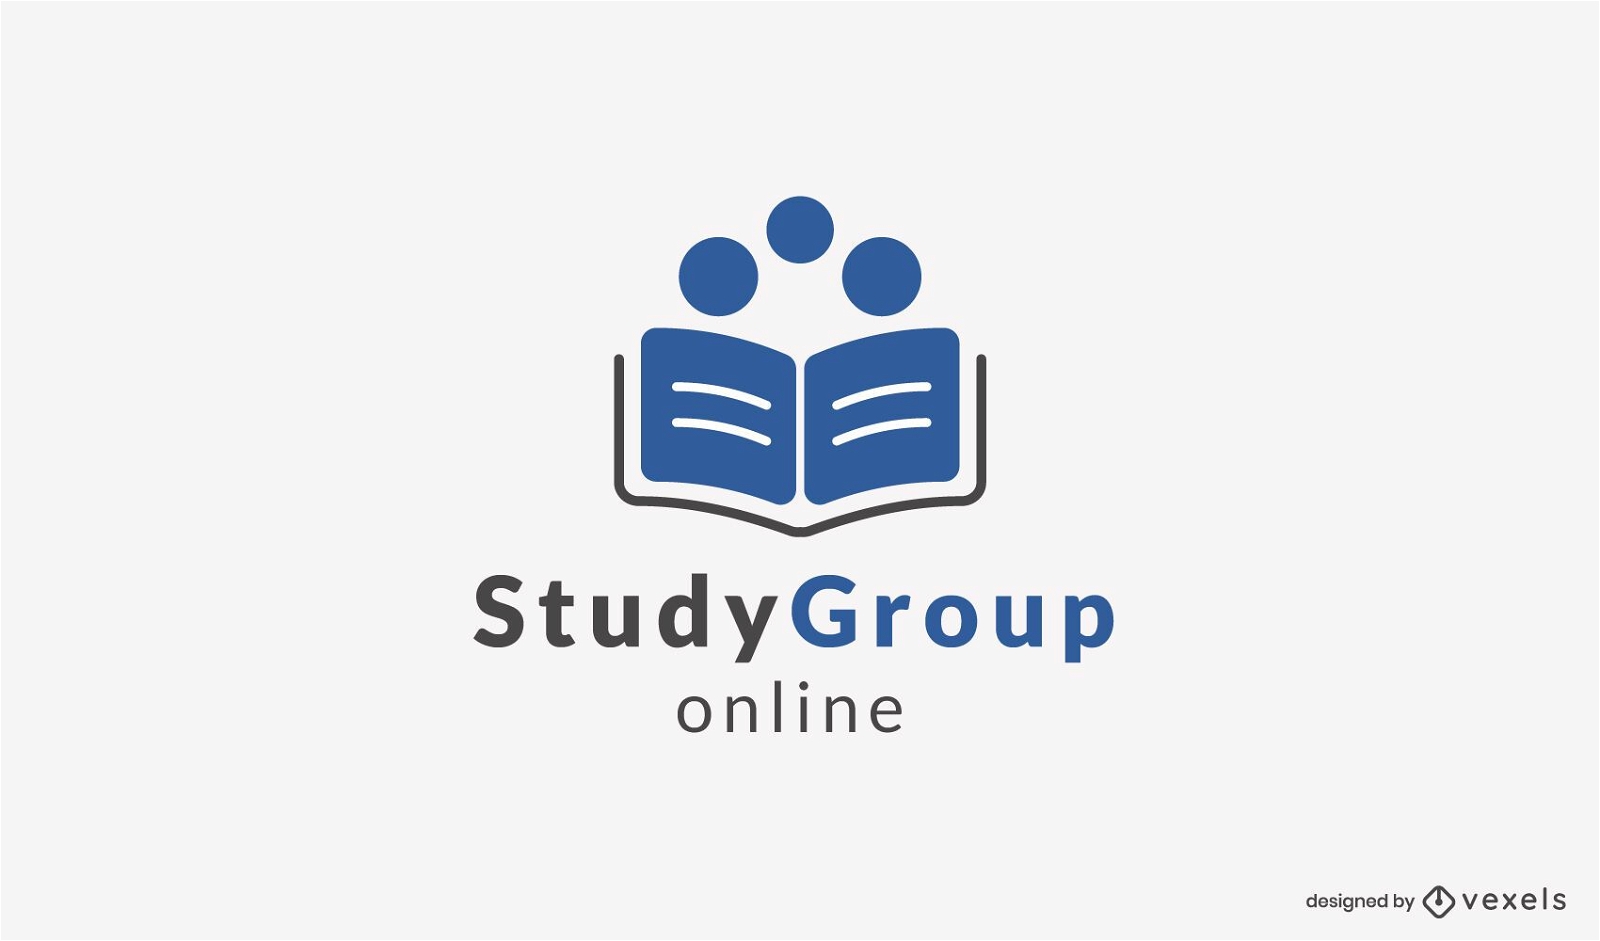 Study group logo design